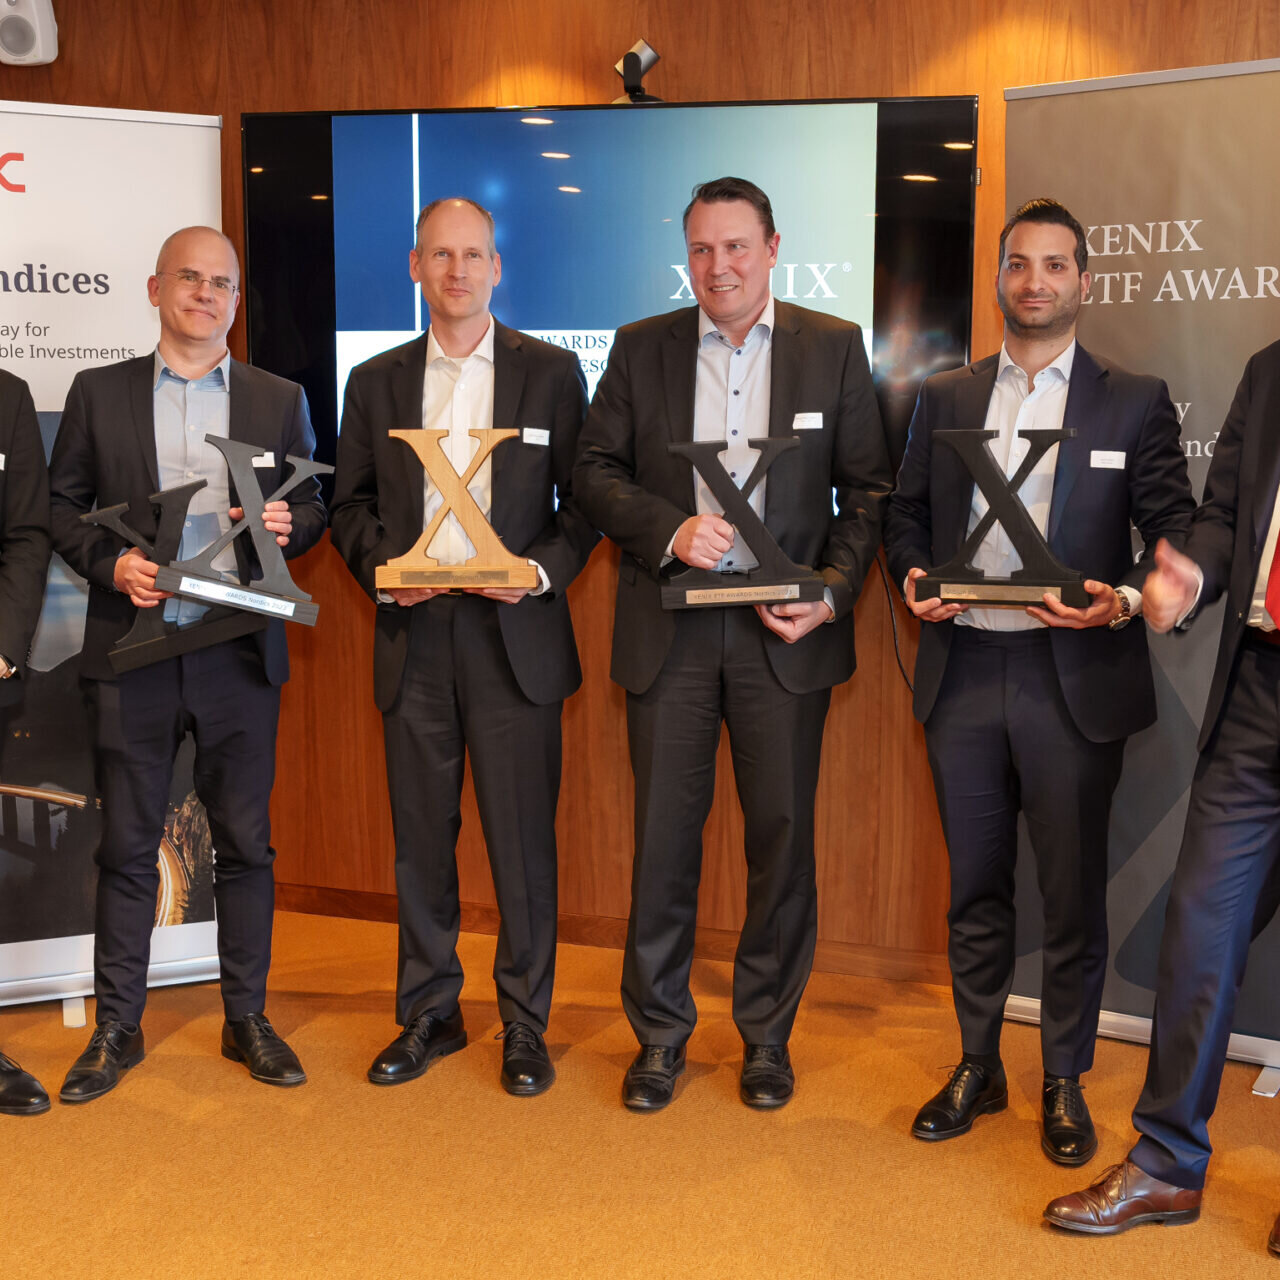 XENIX ETF Awards Nordics